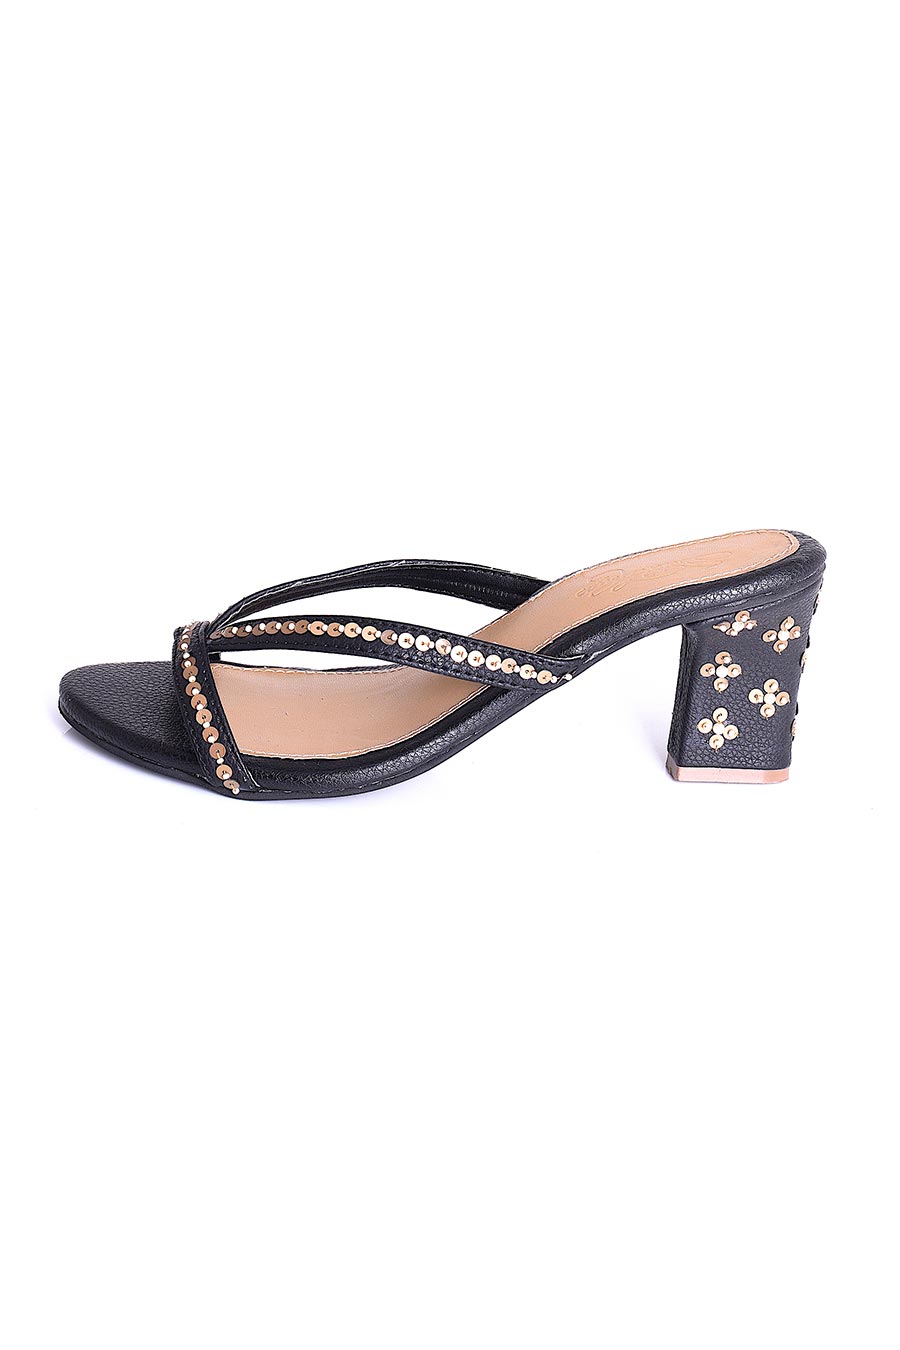 Celine Black Strappy Sandals With Heel